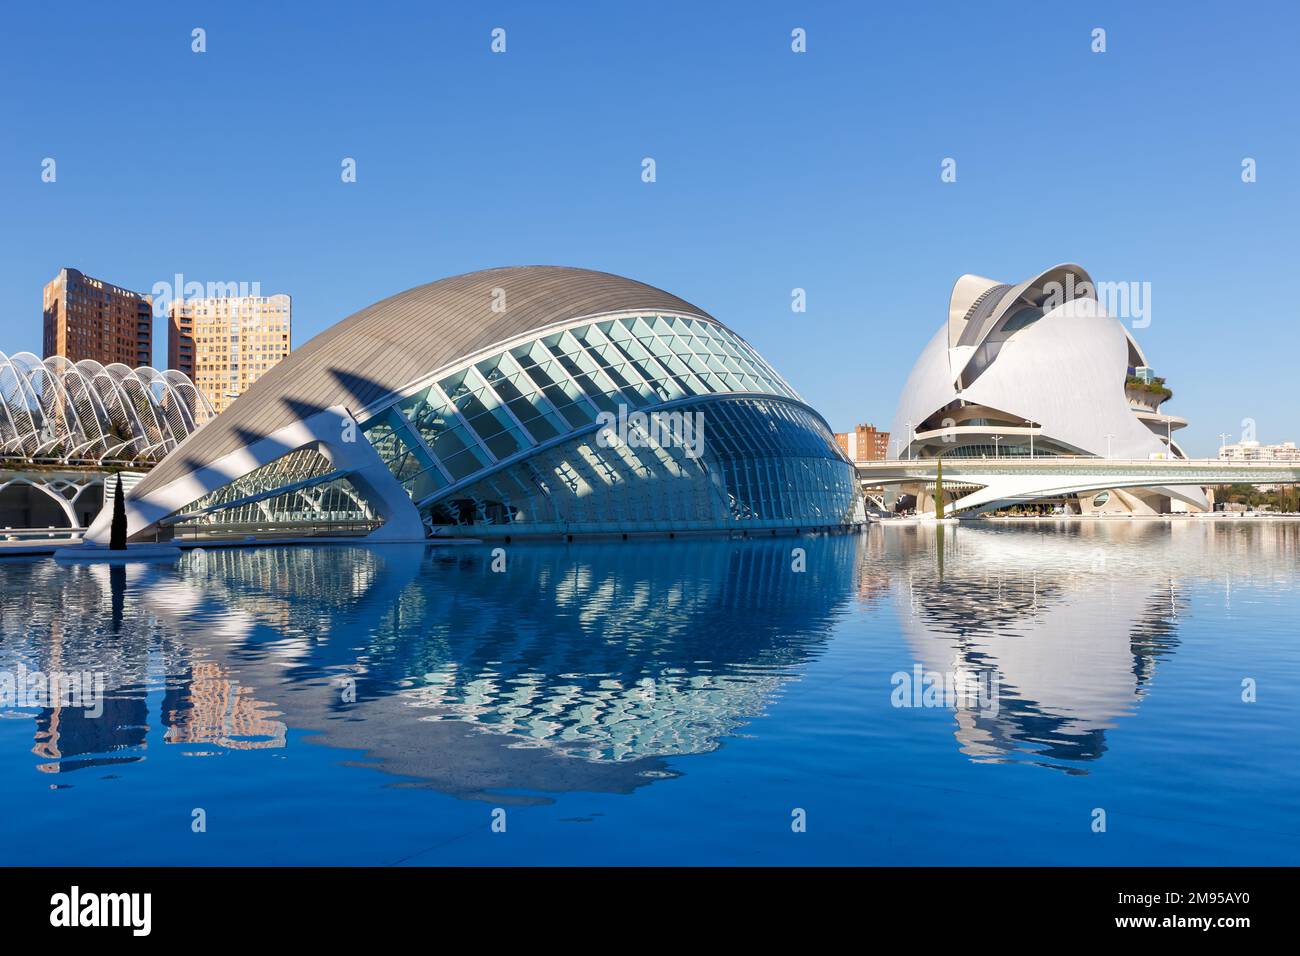 Valencia, Spanien - 18. Februar 2022: Ciutat de les Arts i les Ciencies Moderne Architektur von Santiago Calatrava in Valencia, Spanien. Stockfoto